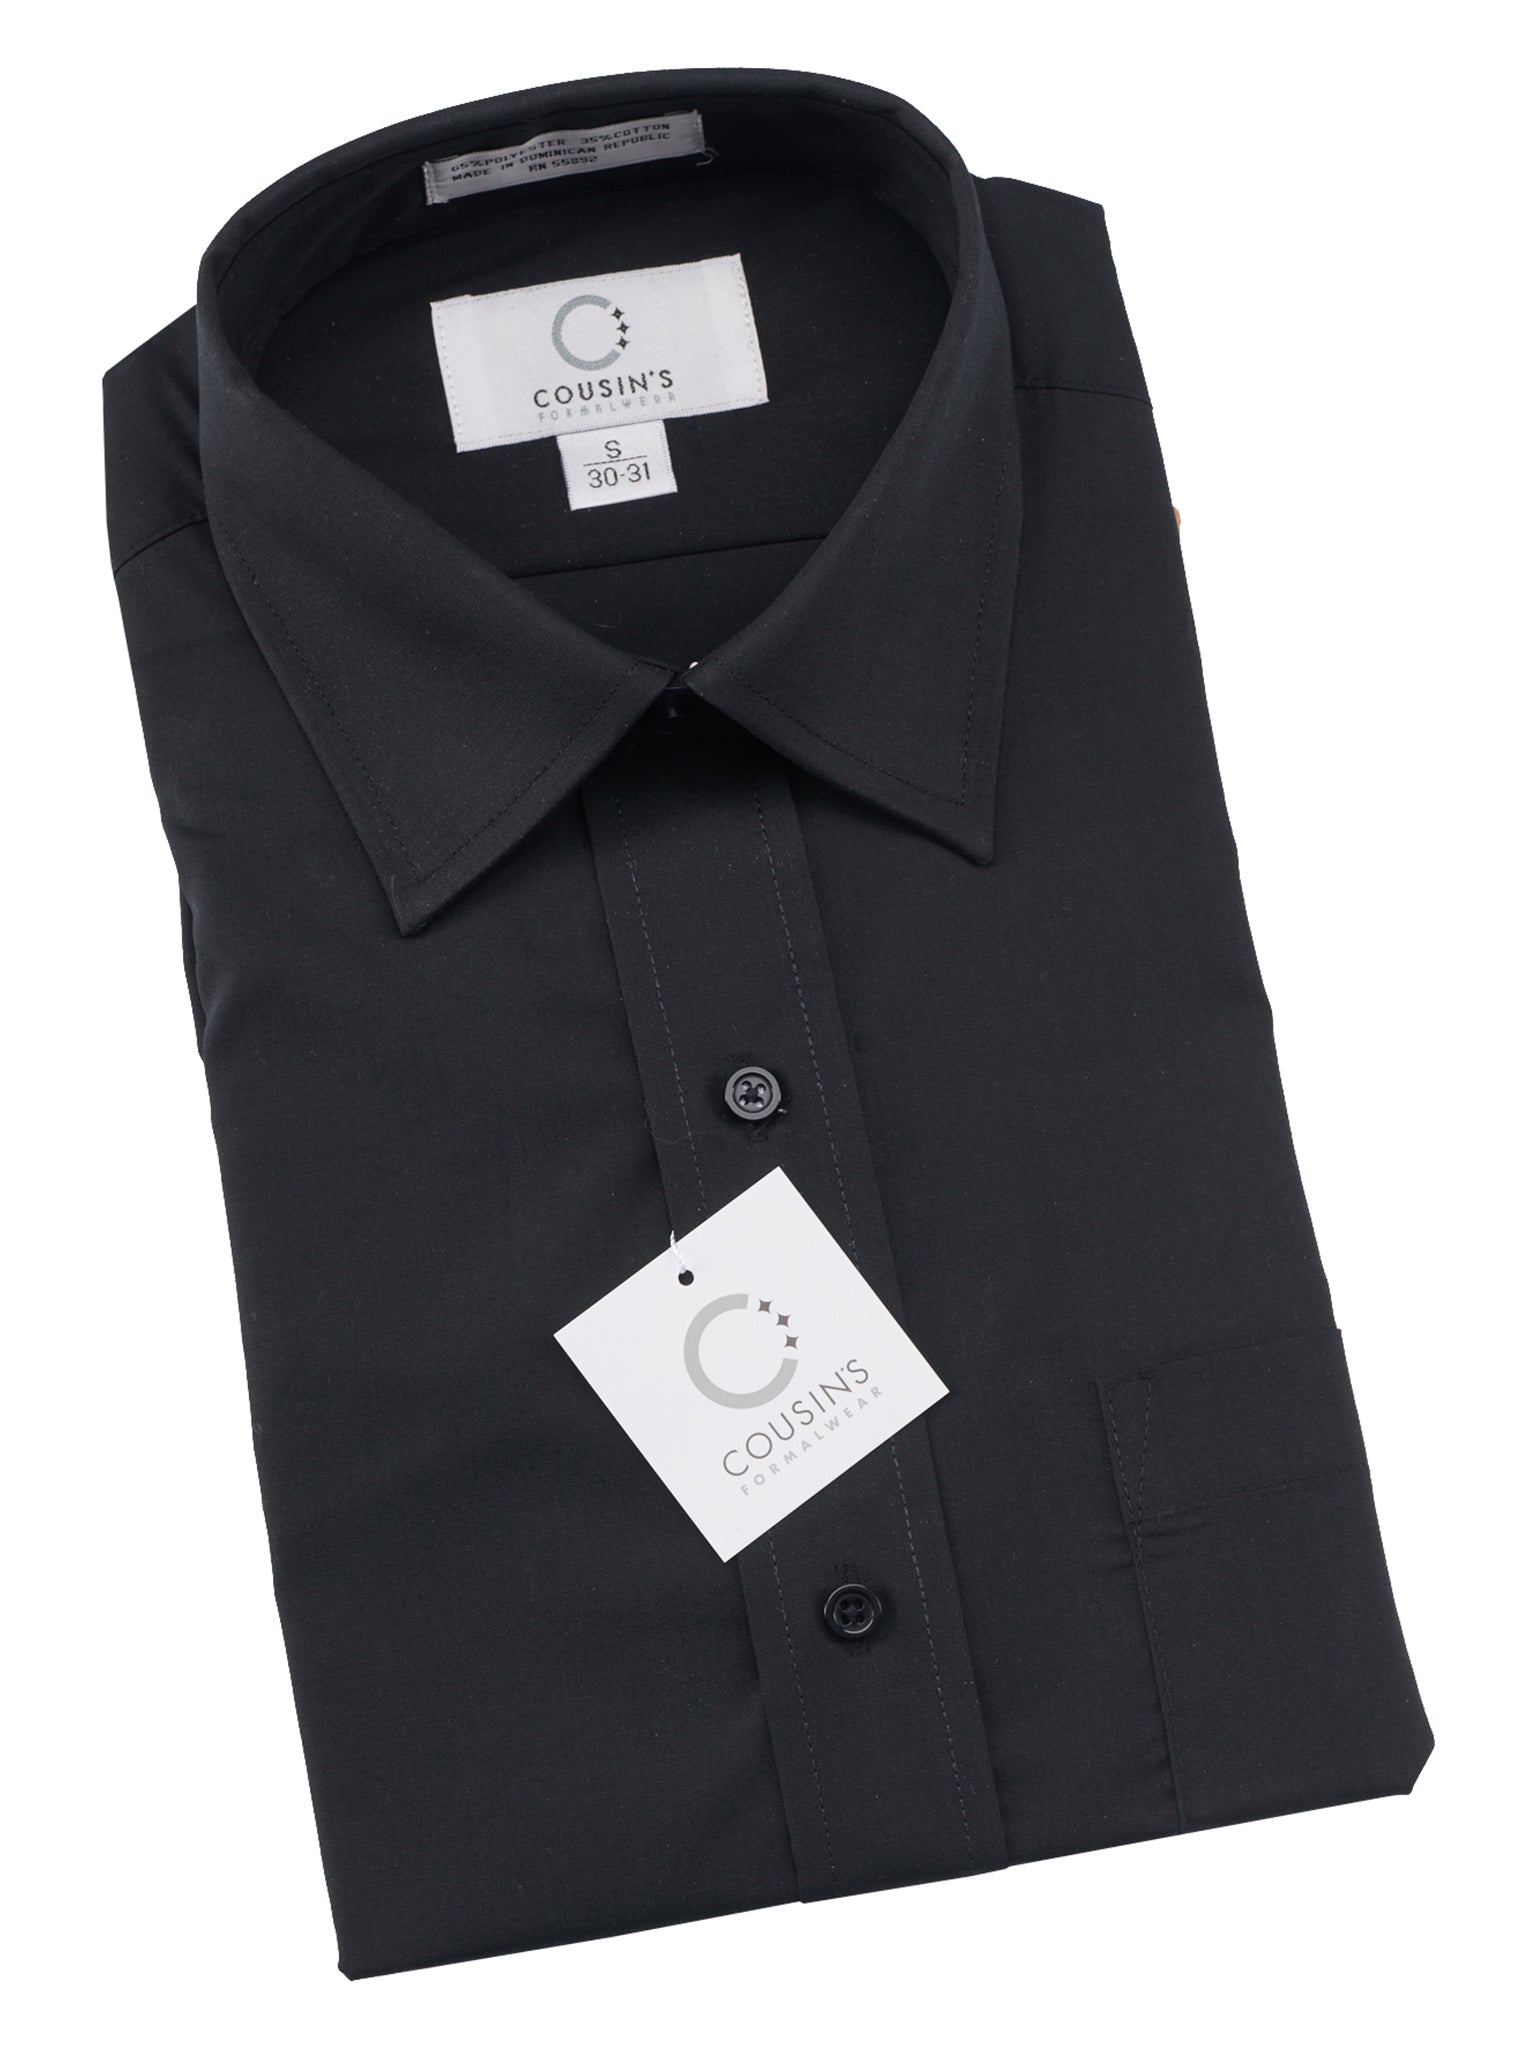 751-B - Black Laydown Collar Non-Pleated Dress Shirt - Boys